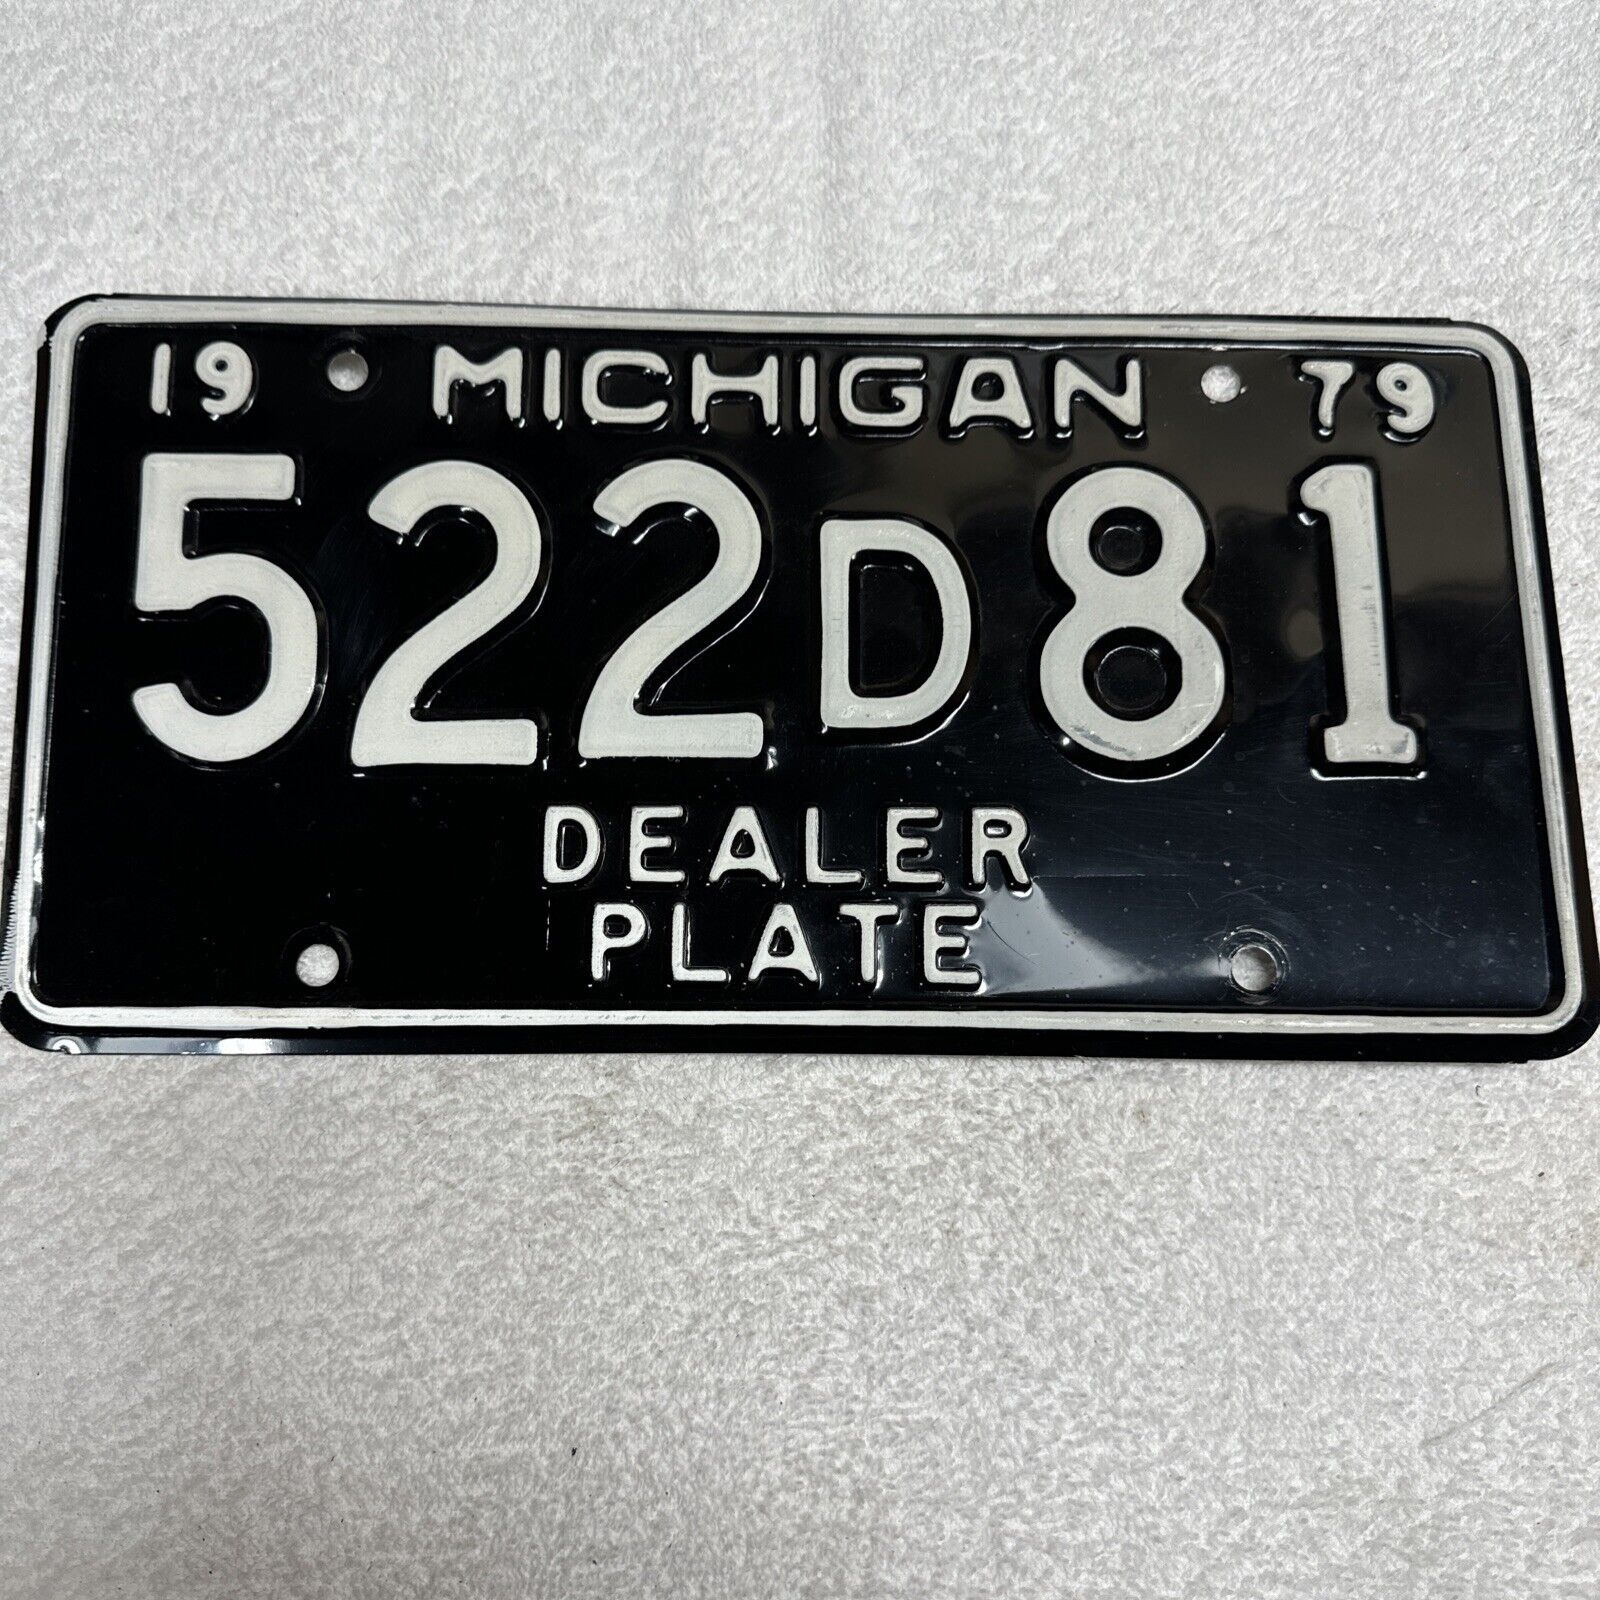 1979 Michigan Dealer License Plate 522D81